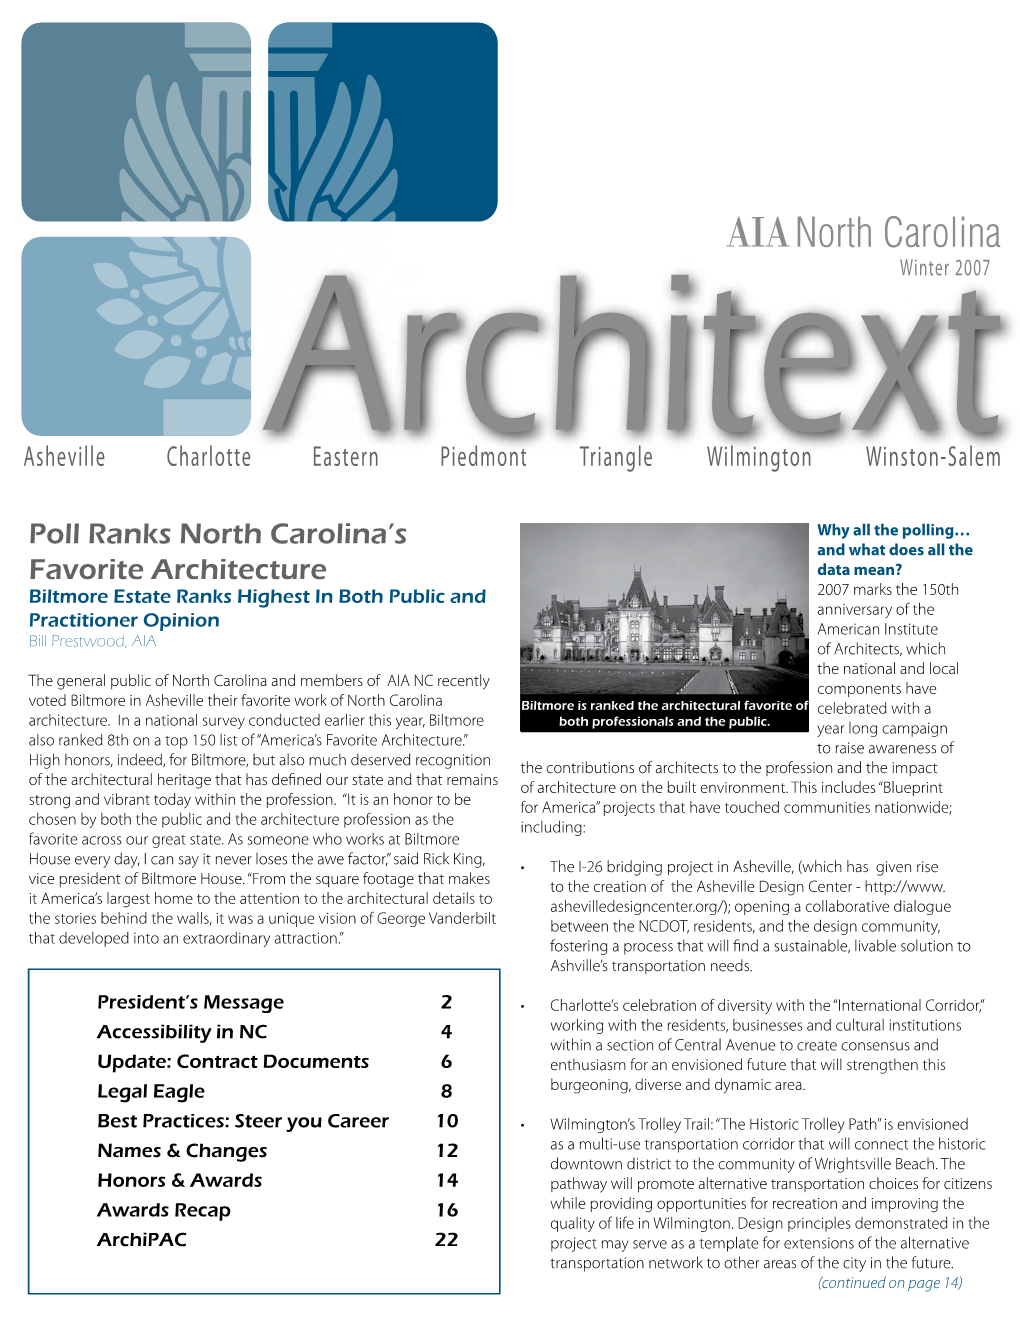 Poll Ranks North Carolina's Favorite Architecture